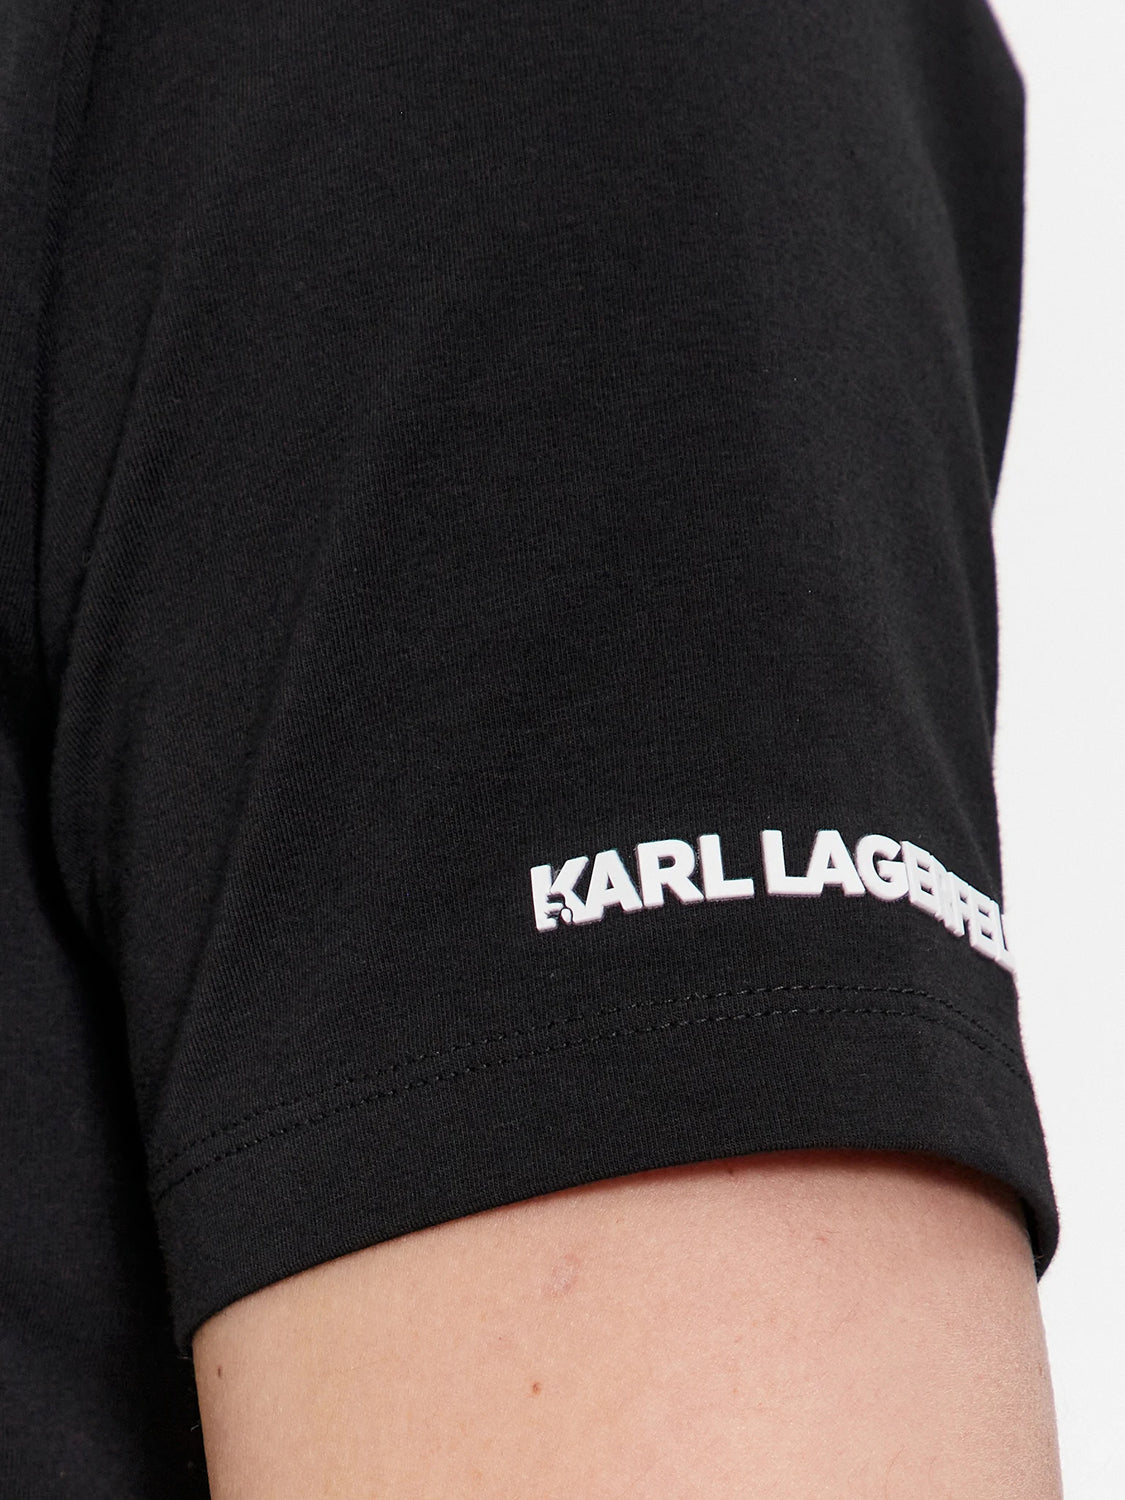 Karl Lagerfeld T Shirt Kl755401 Black Preto_shot3